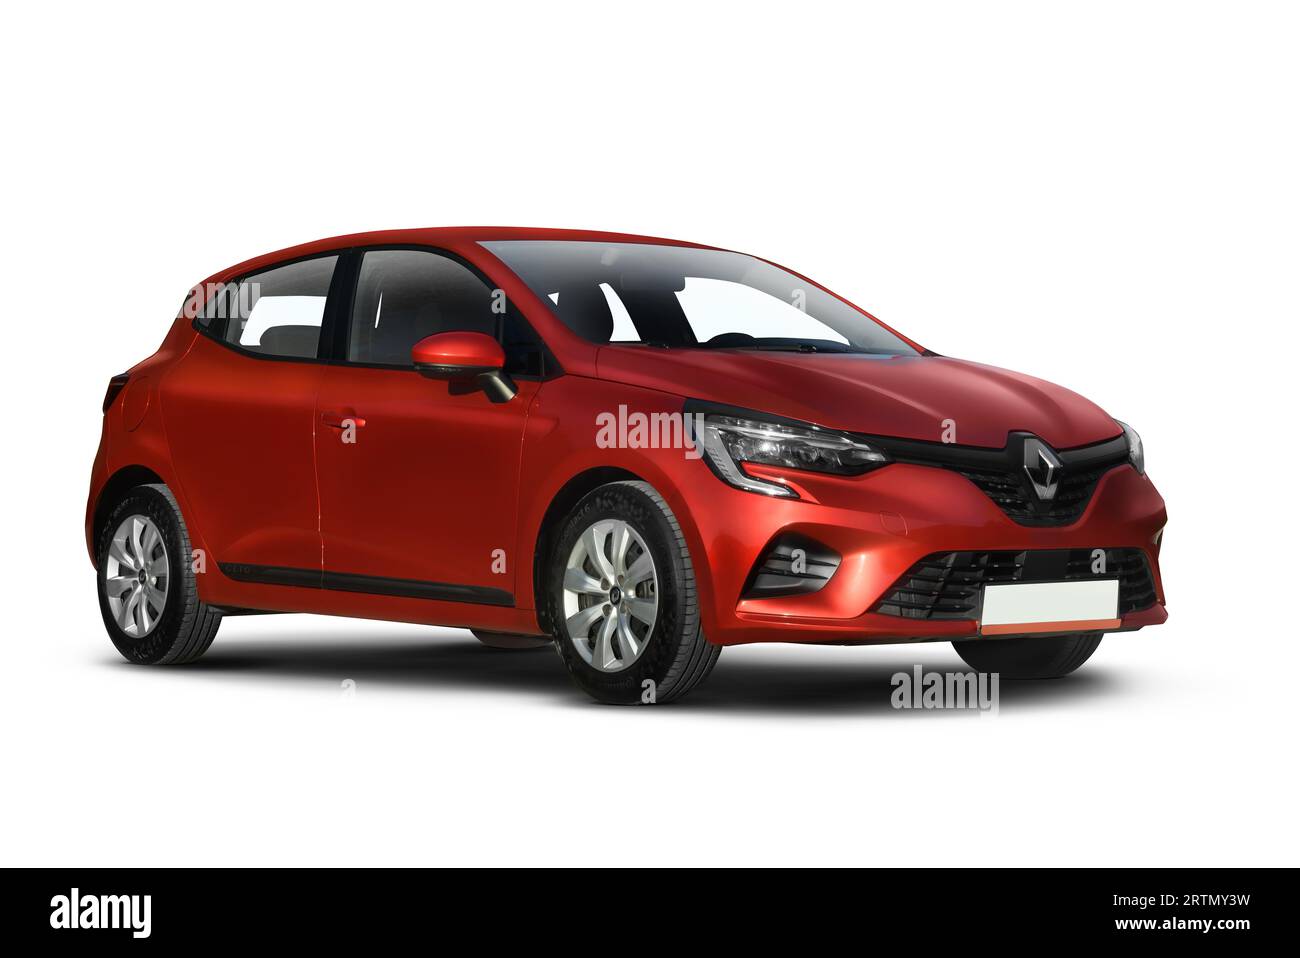 Renault clio 5 -Fotos und -Bildmaterial in hoher Auflösung – Alamy